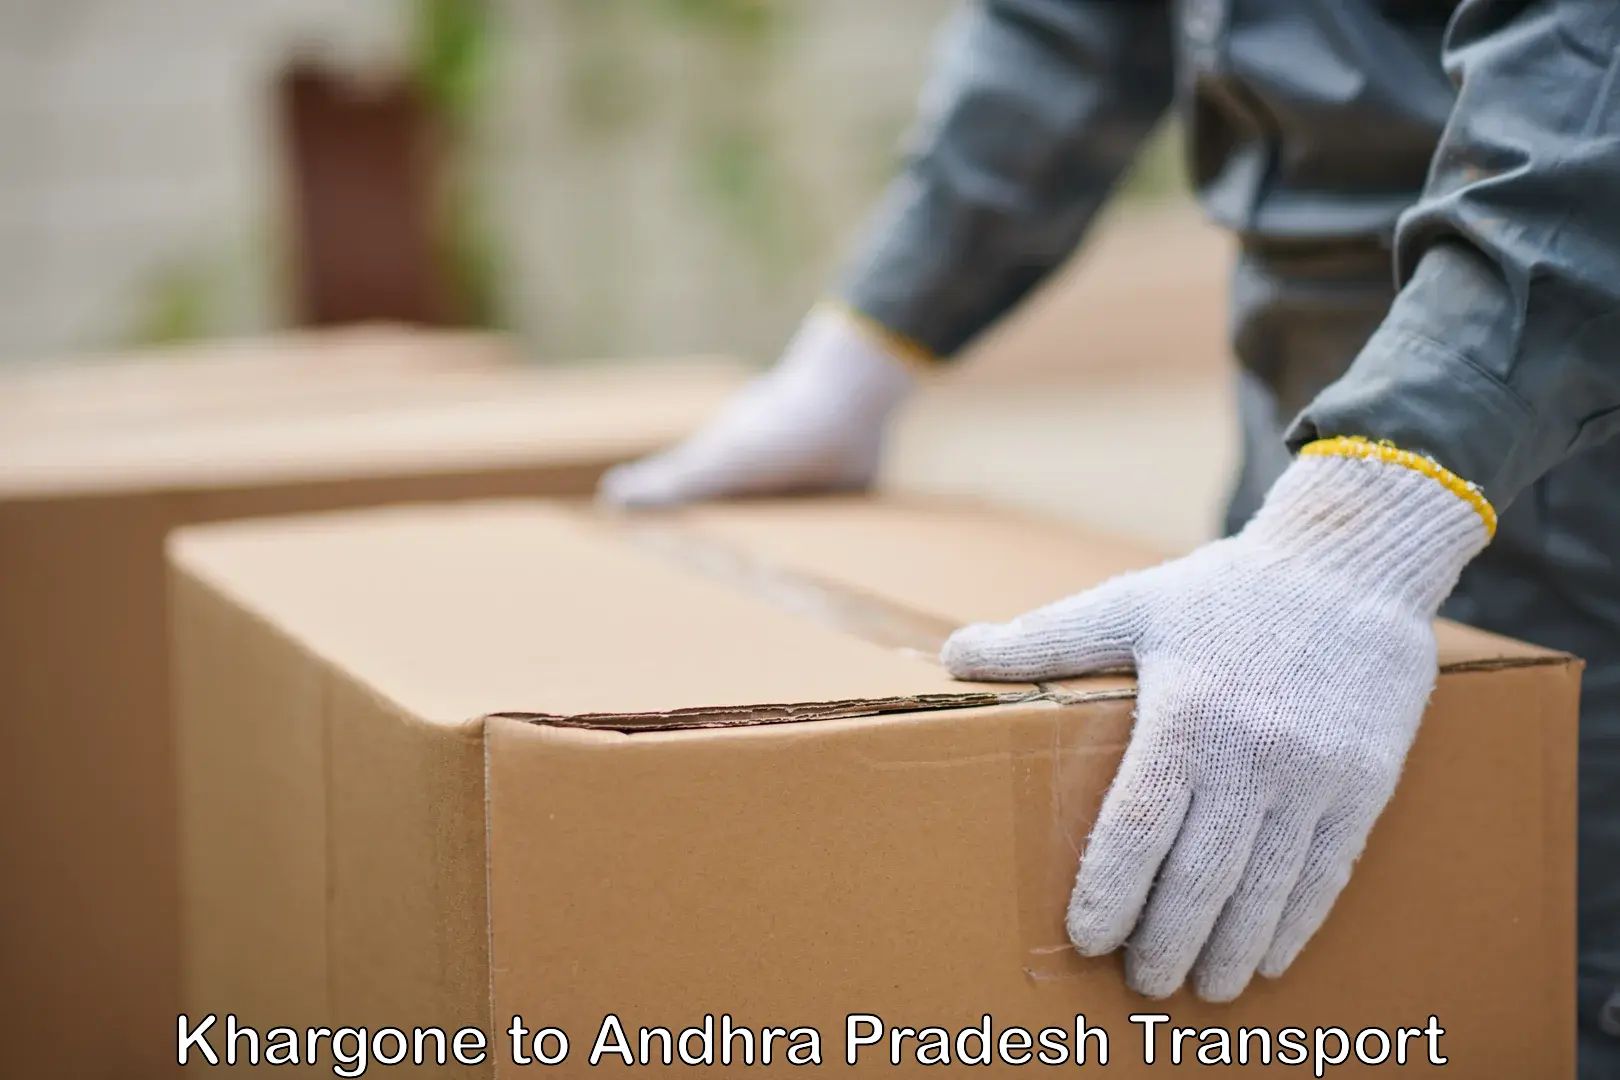 Truck transport companies in India Khargone to Andhra Pradesh